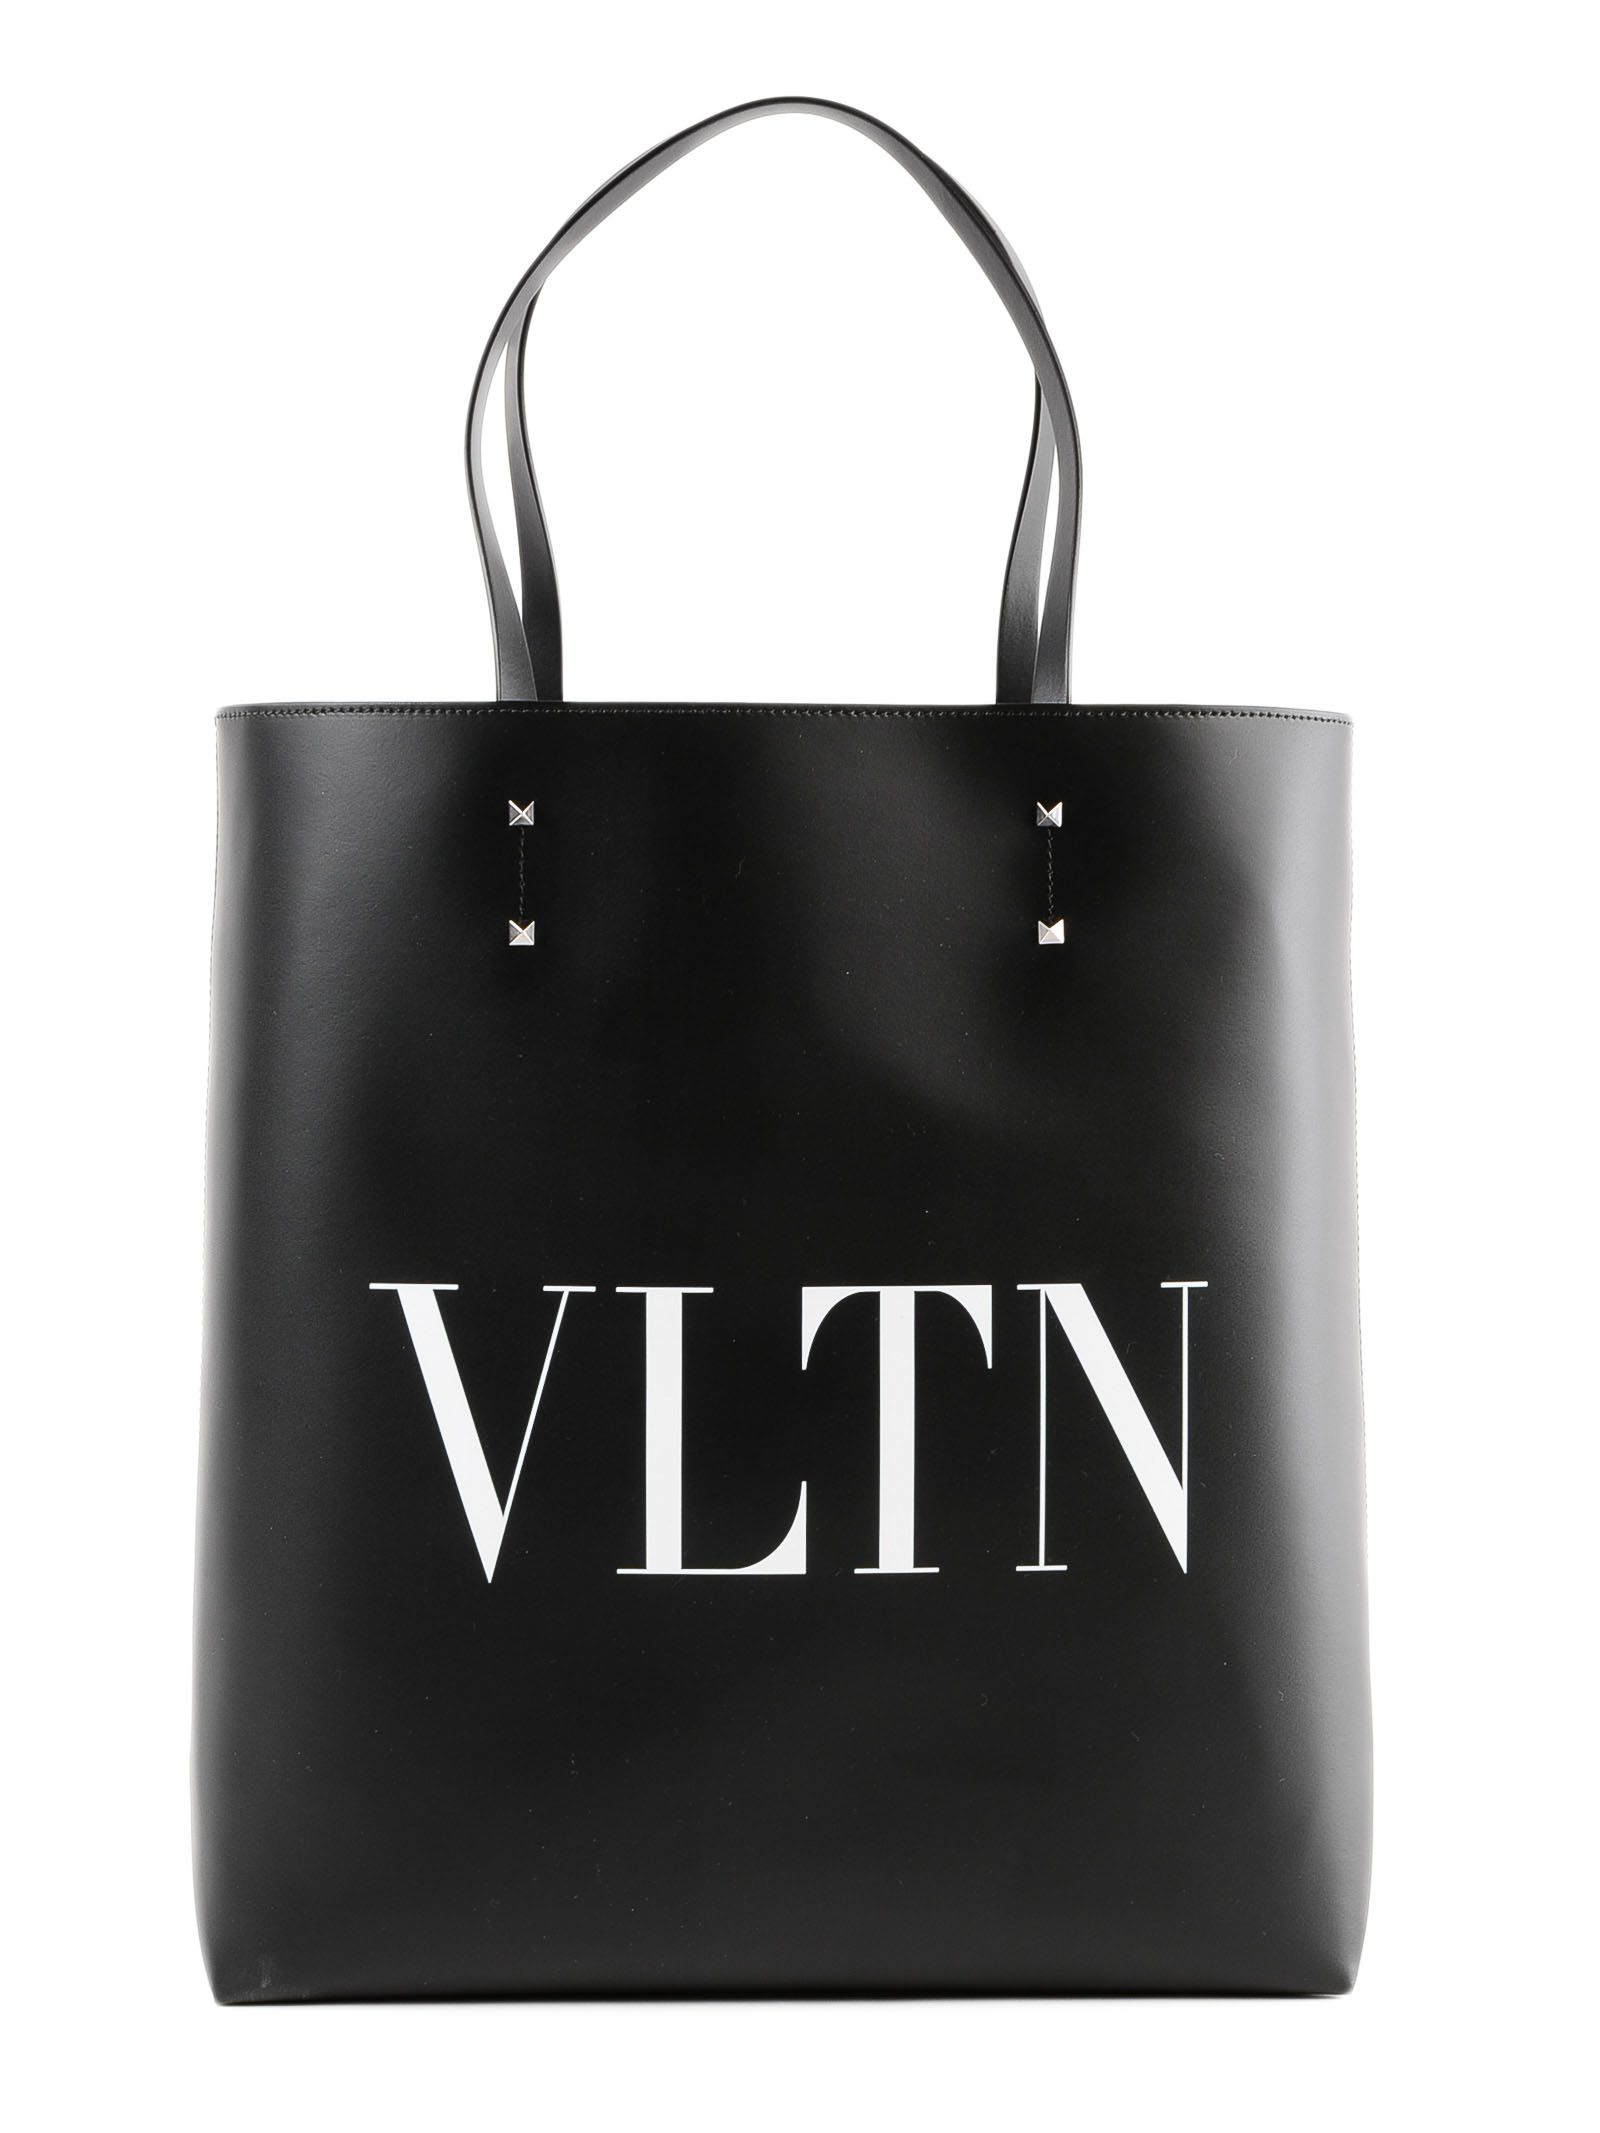 VALENTINO BLACK AND WHITE VLTN LEATHER TOTE BAG, BLACK WHITE | ModeSens